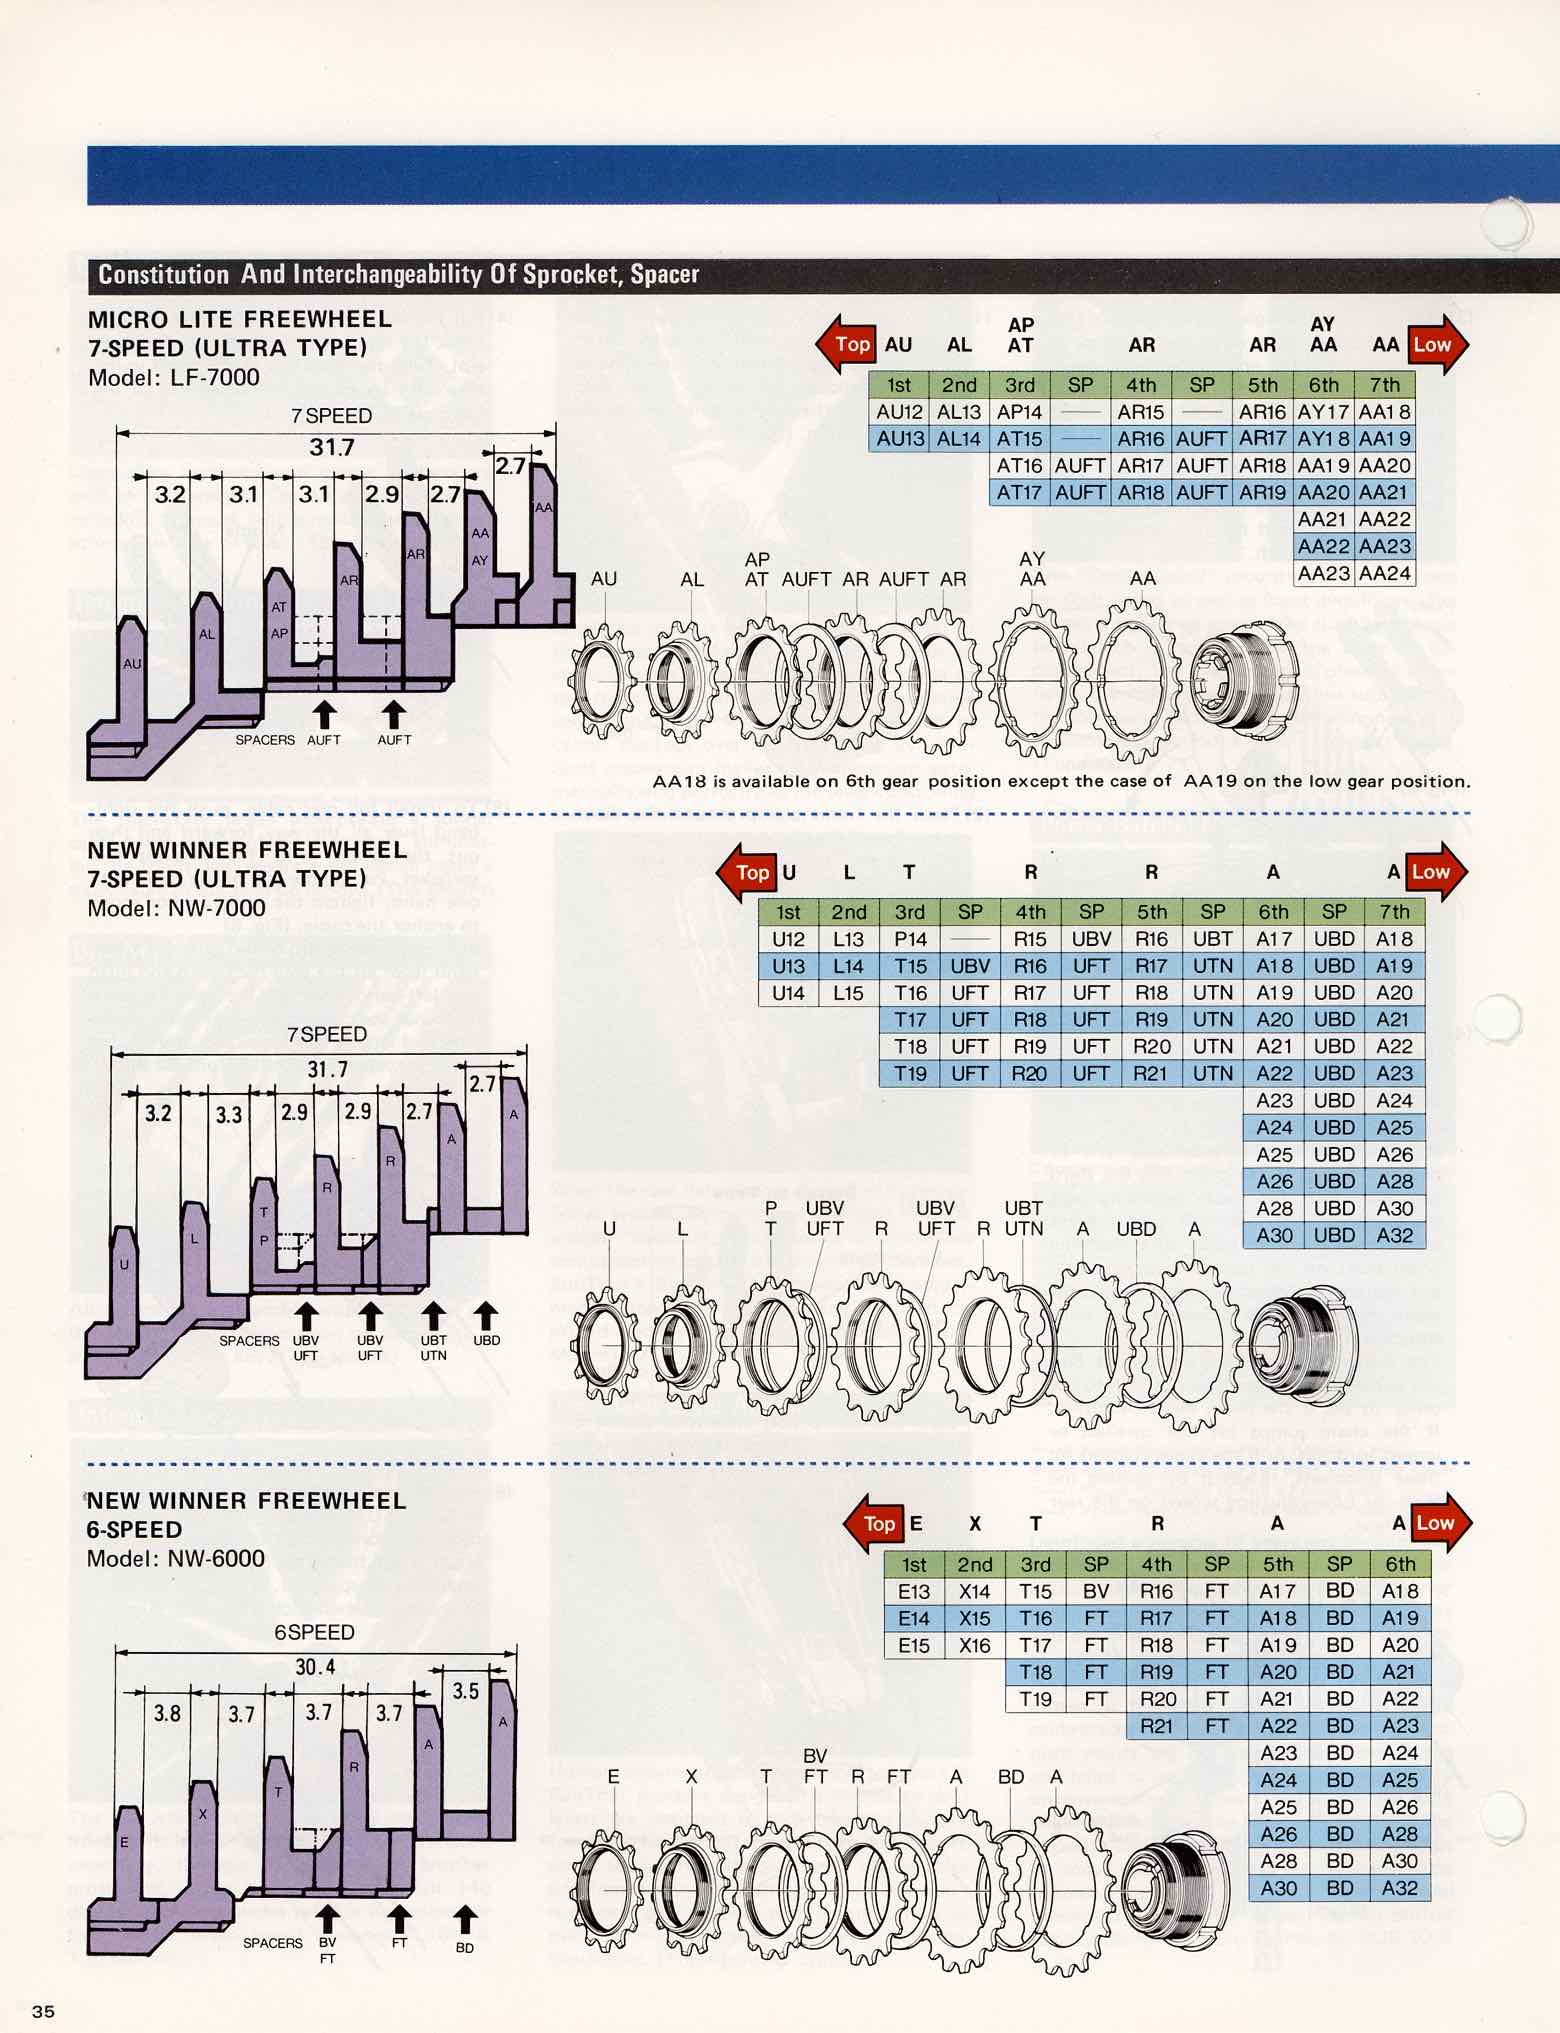 SunTour Bicycle Equipment Catalog No 61 - Page 35 main image